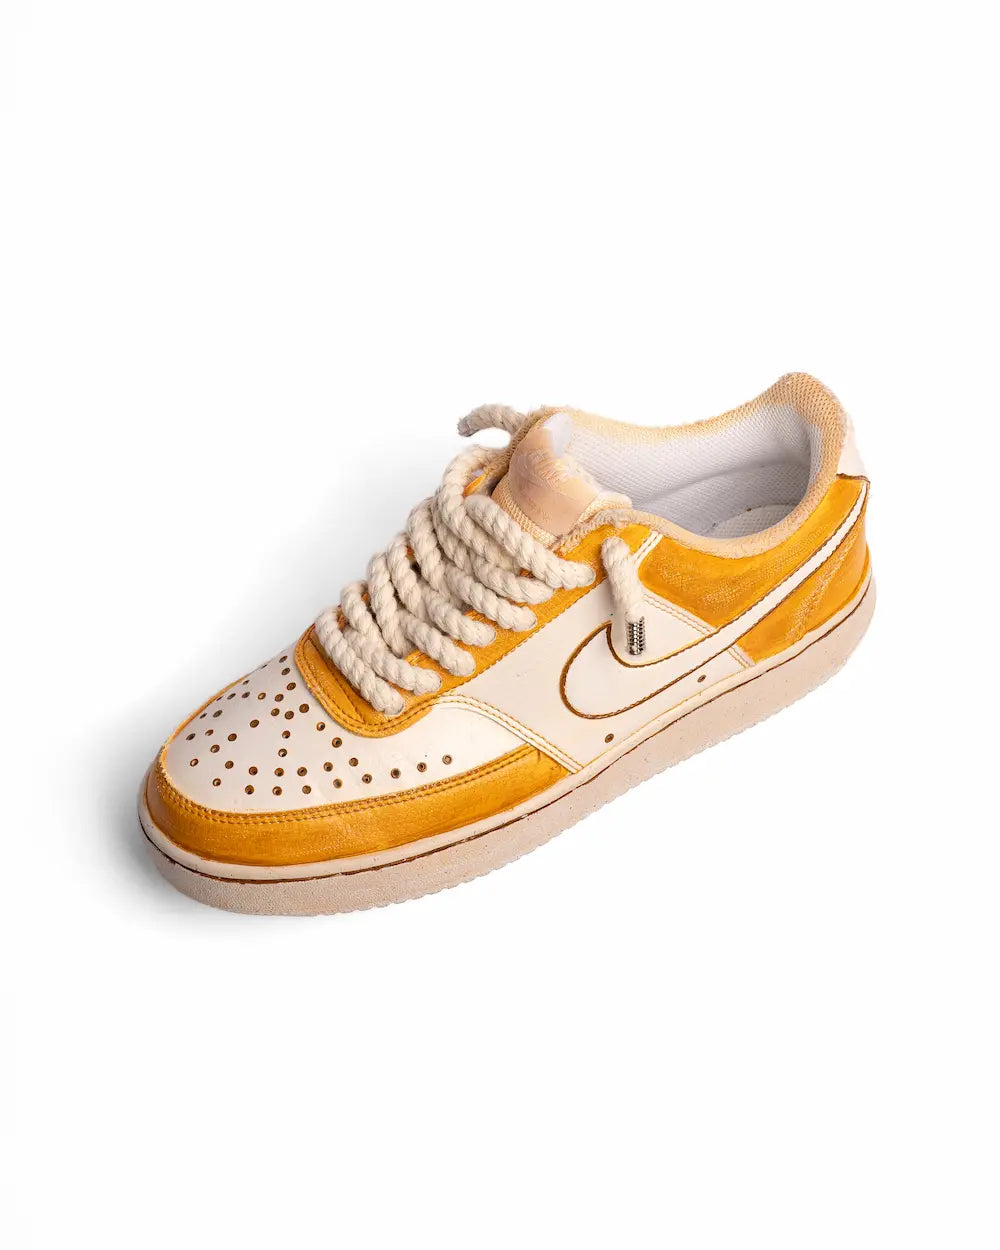 Nike Court Vision custom modello 5 Points Honey, dipinta a mano in due tonalità di giallo ocra